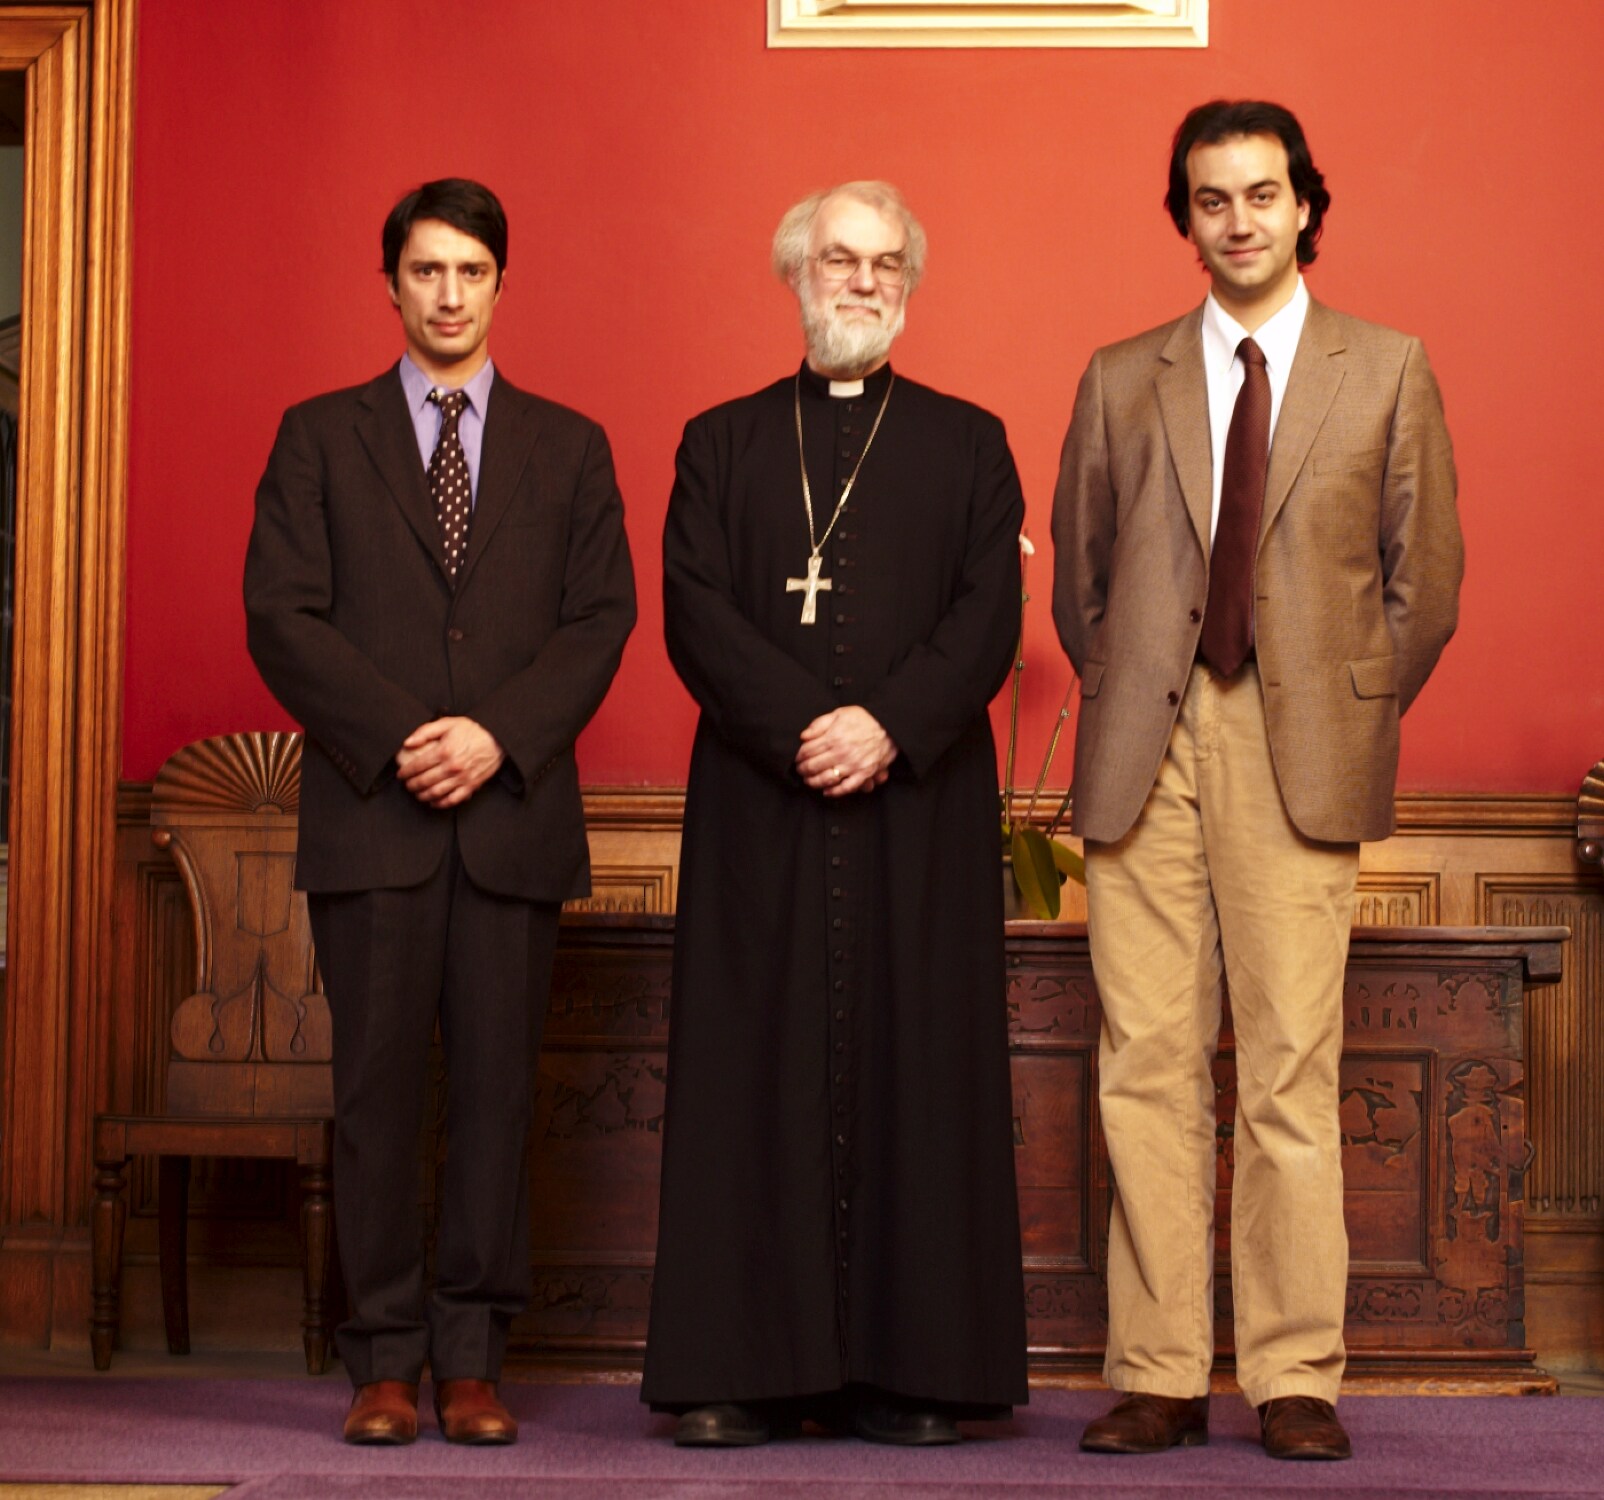 Jules Naudet, Gedeon Naudet and Dr. Rowan Williams, Archbishop of Canterbury and head of the Church of England. London, England, 2008